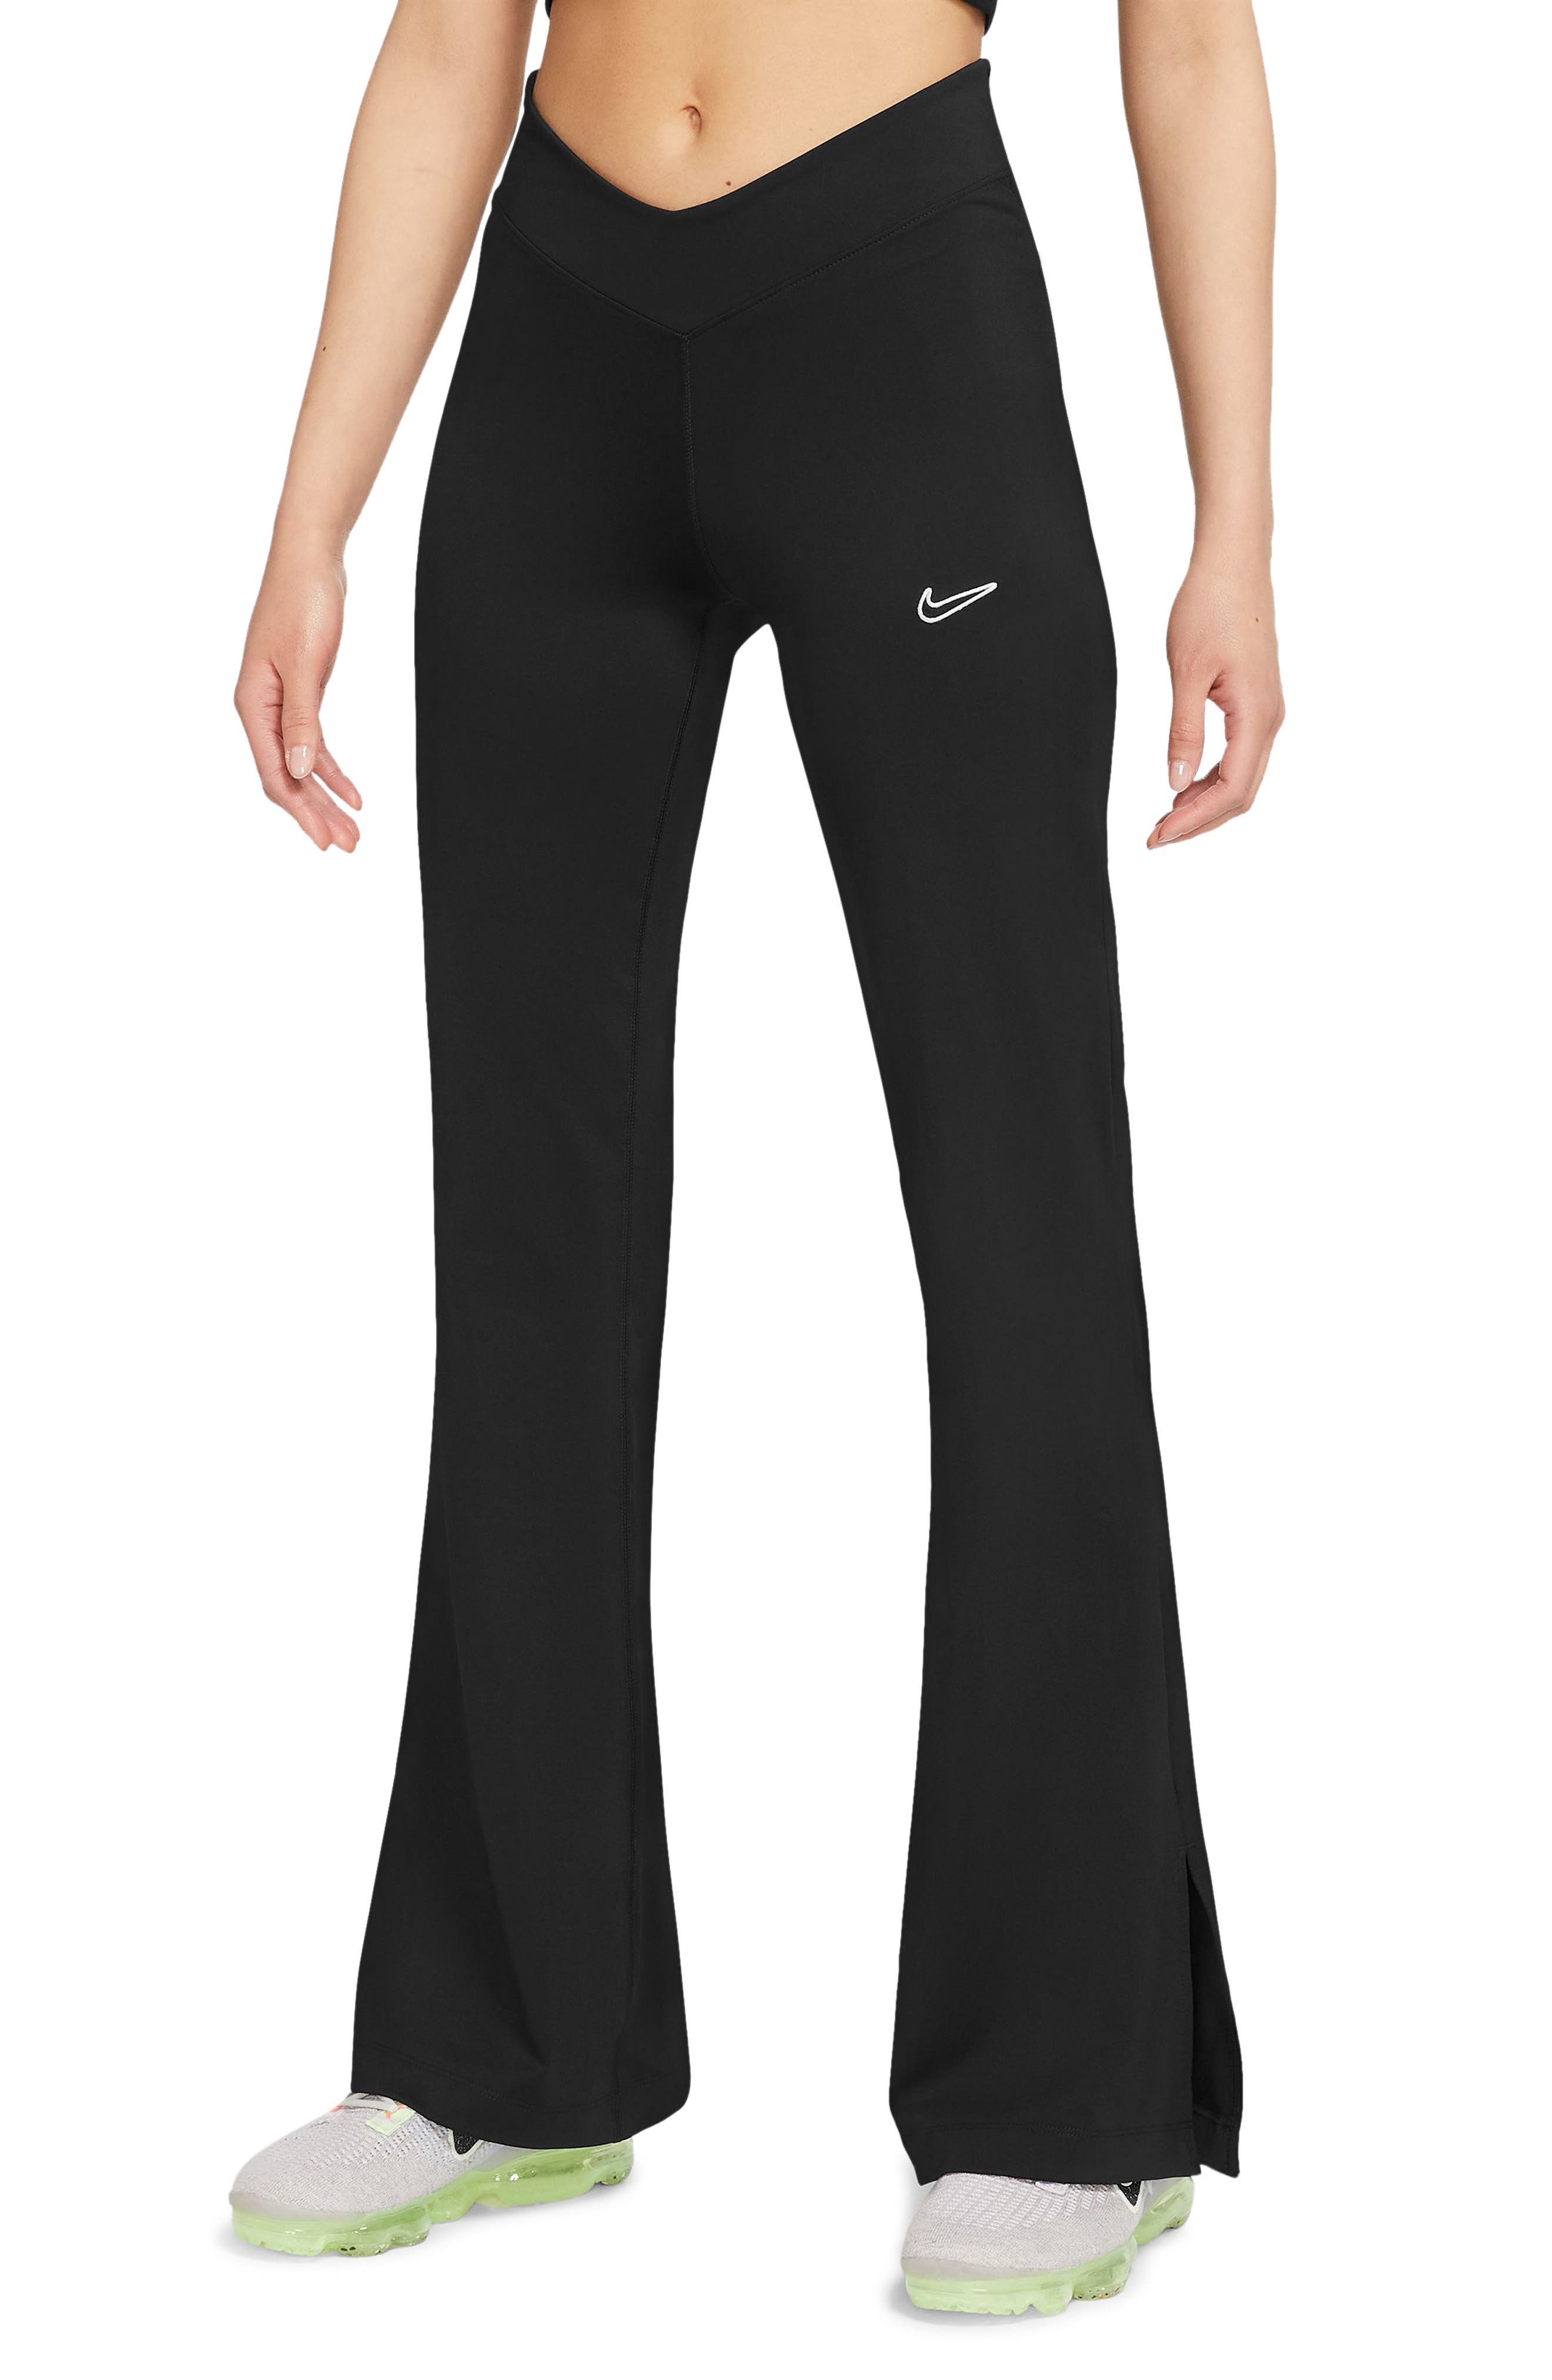 Nike Performance Leggings for Women - Shop on FARFETCH